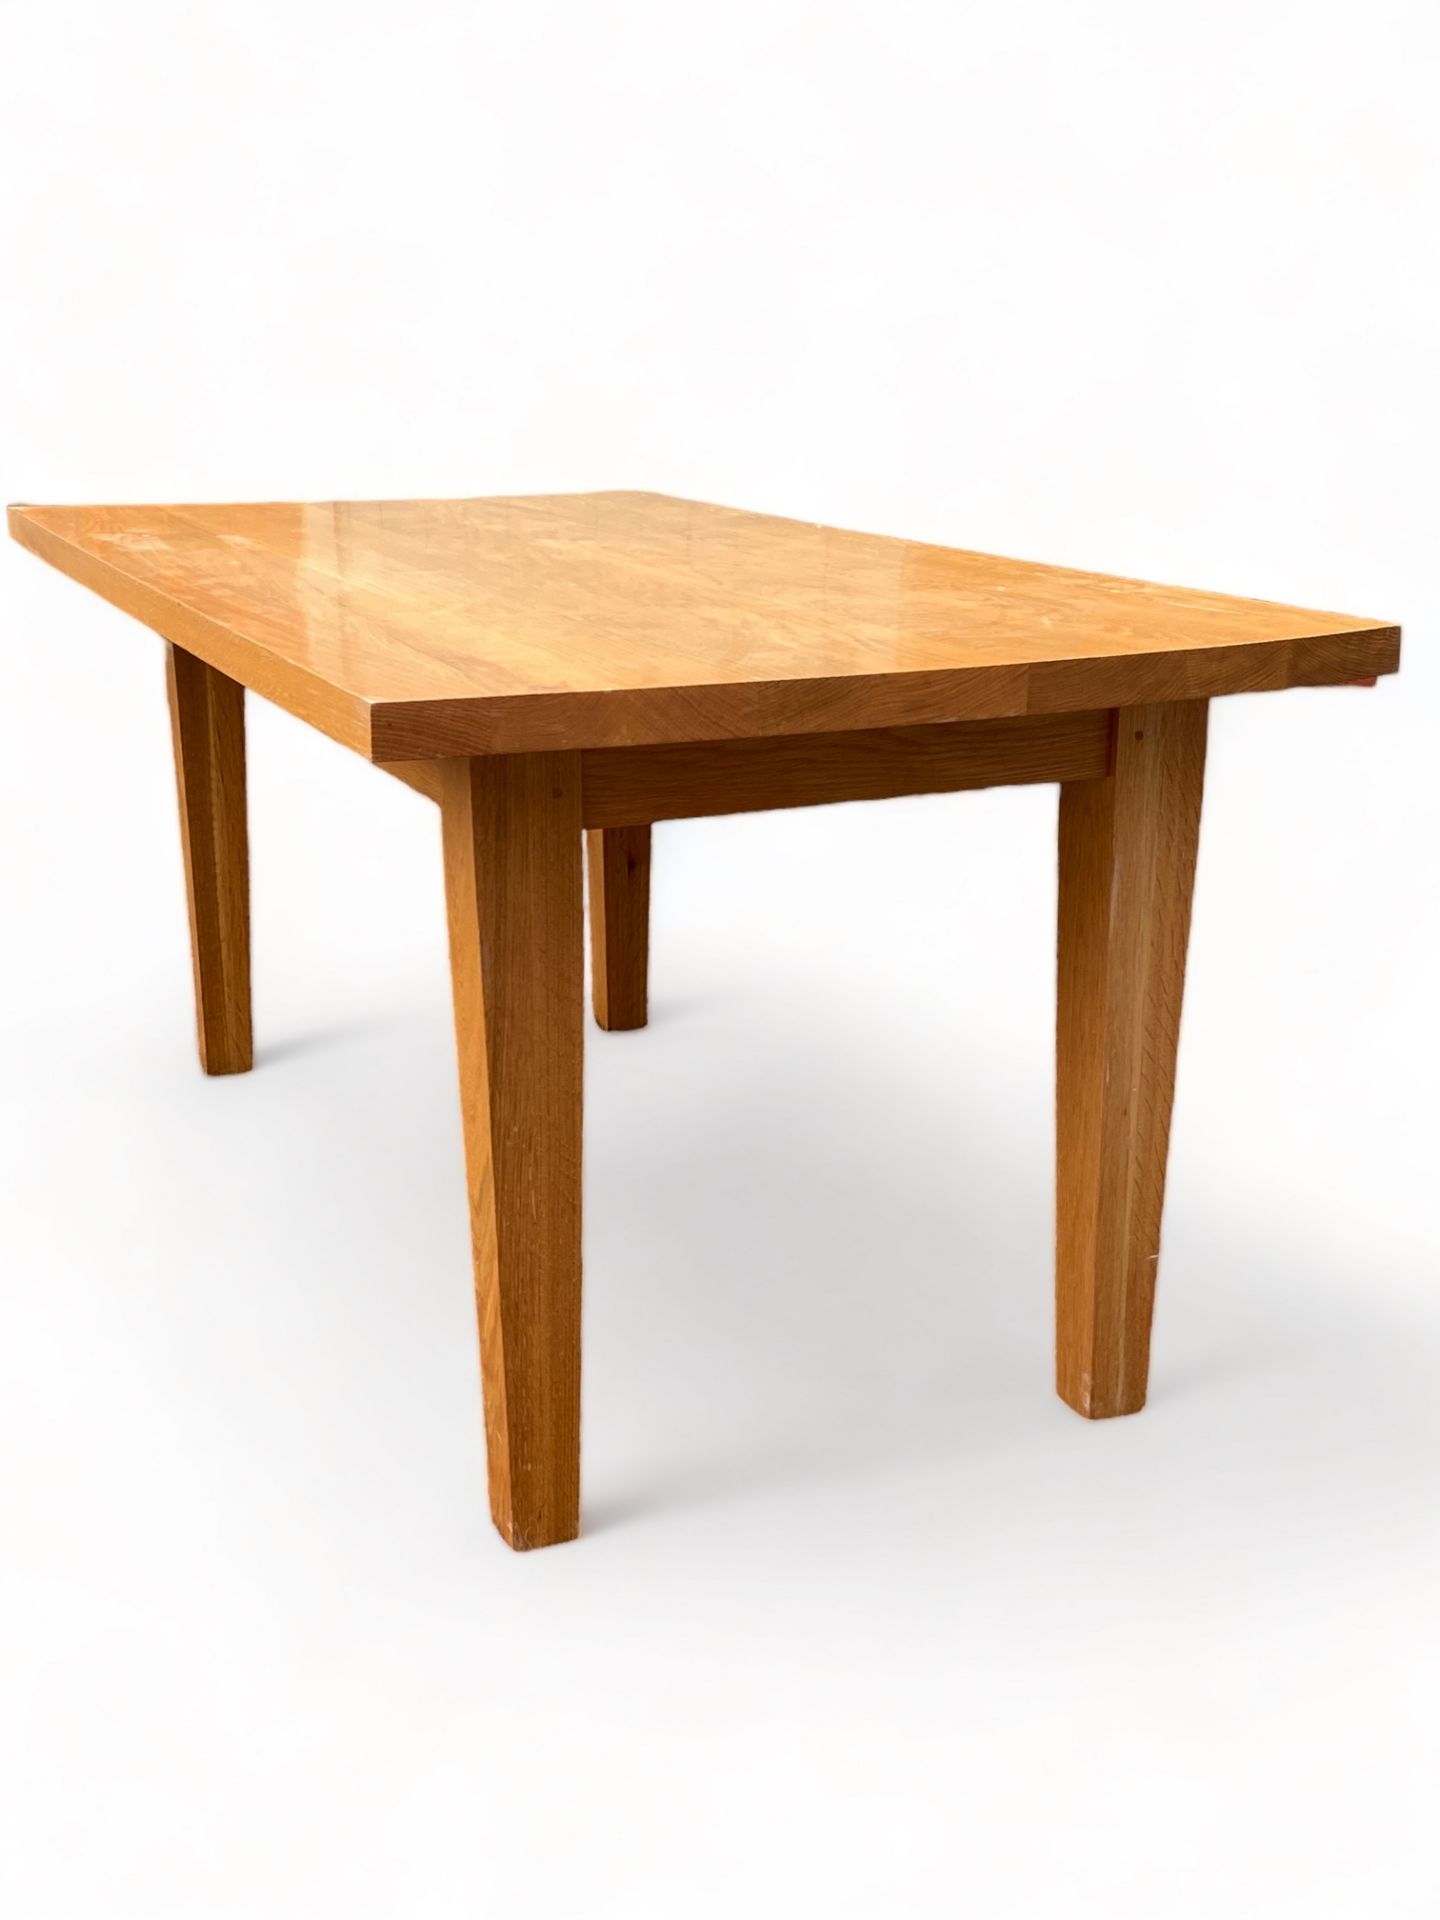 A contemporary oak writing tabe / desk by De La Espada - Image 5 of 5